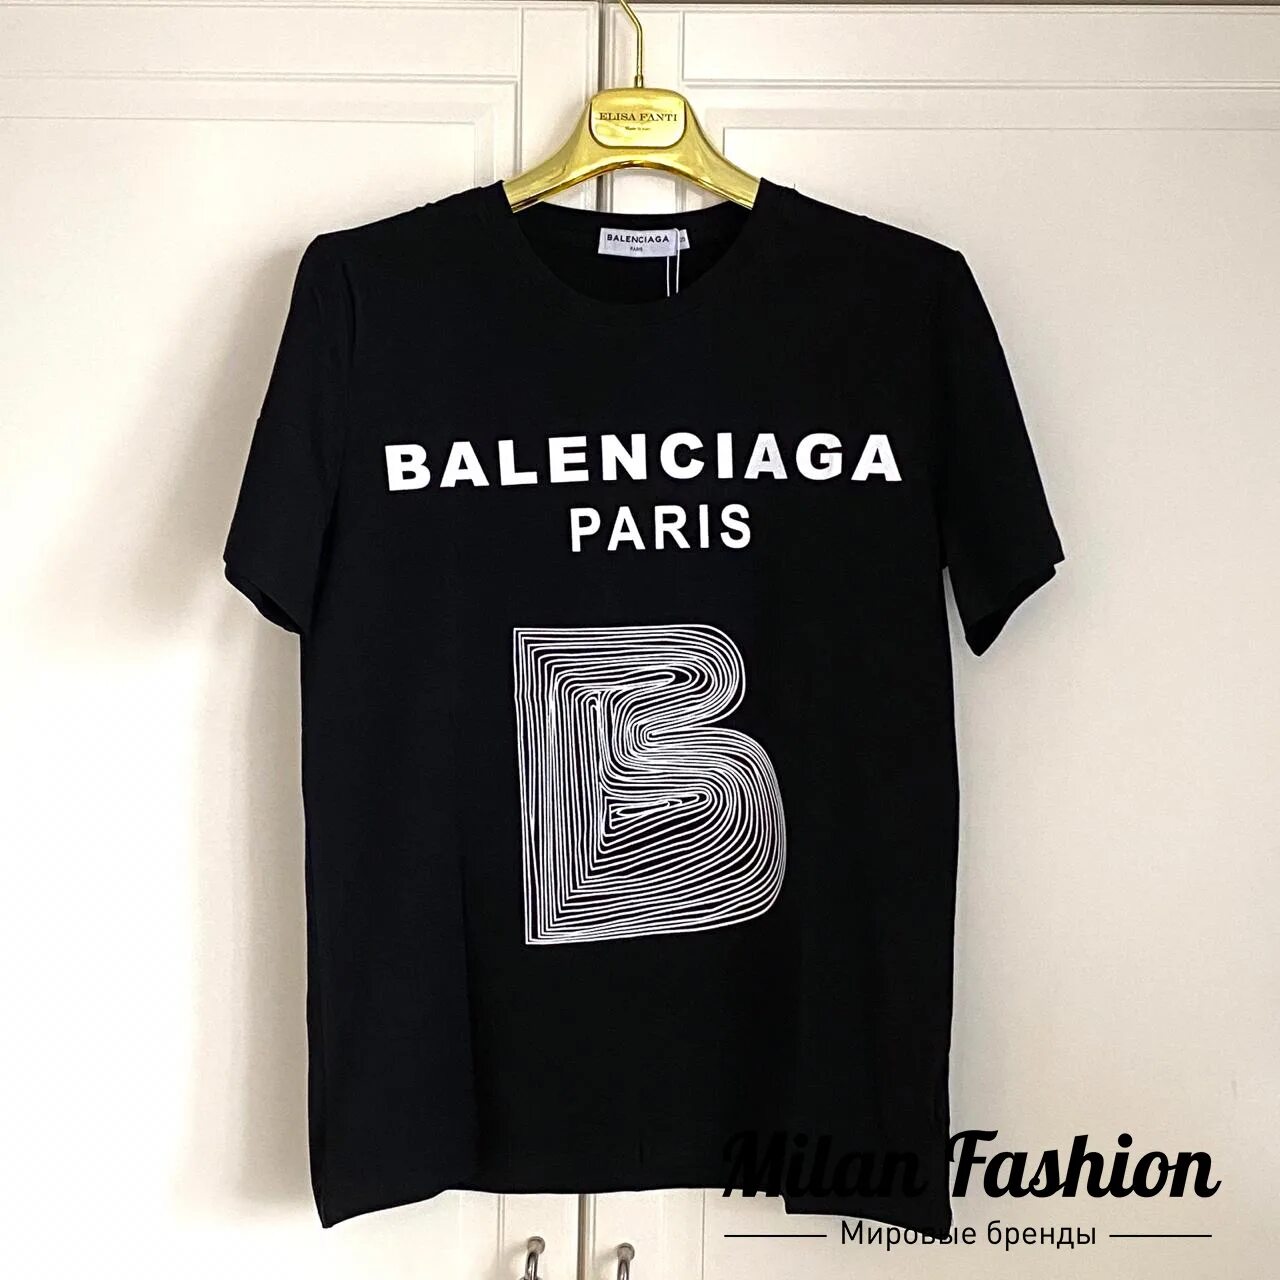 Футболка Balenciaga Paris мужская черная. Balenciaga Paris футболка. Balenciaga Paris футболка черная. Майка Баленсиага мужская.